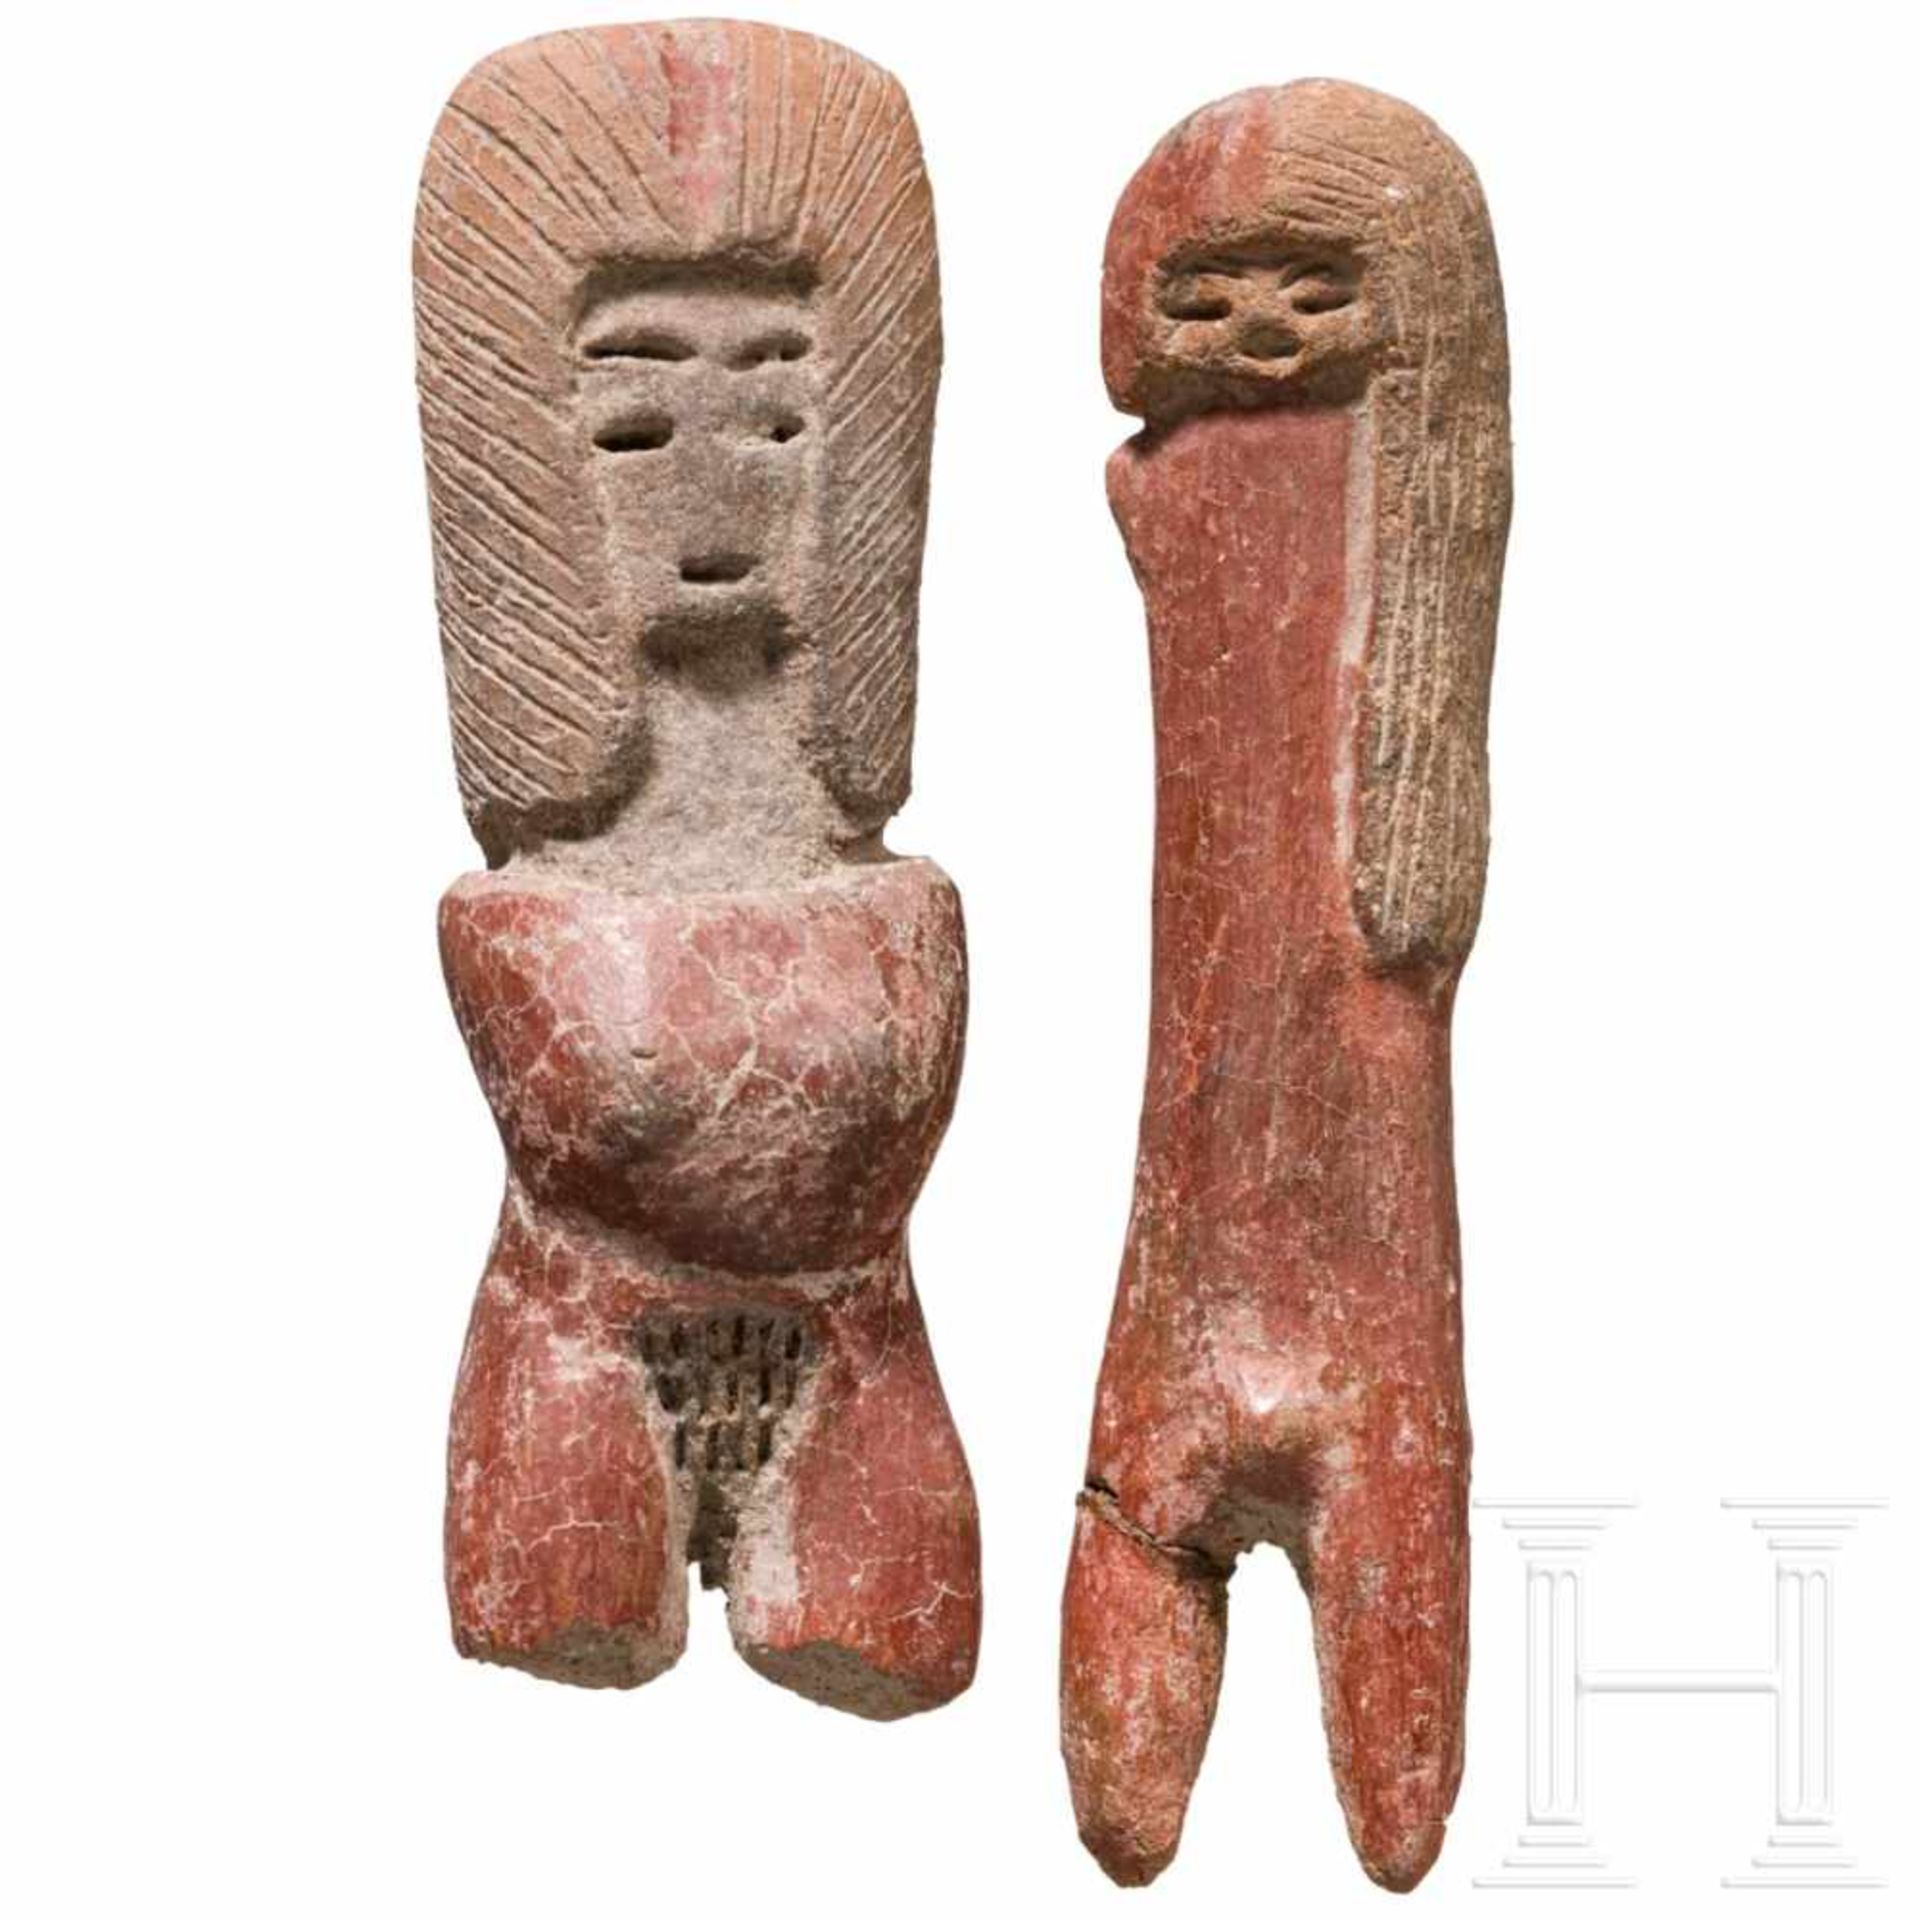 A pair of Ecuadorian Valdivia figures, circa 2500 – 2000 B.C.Two small terracotta figures. A